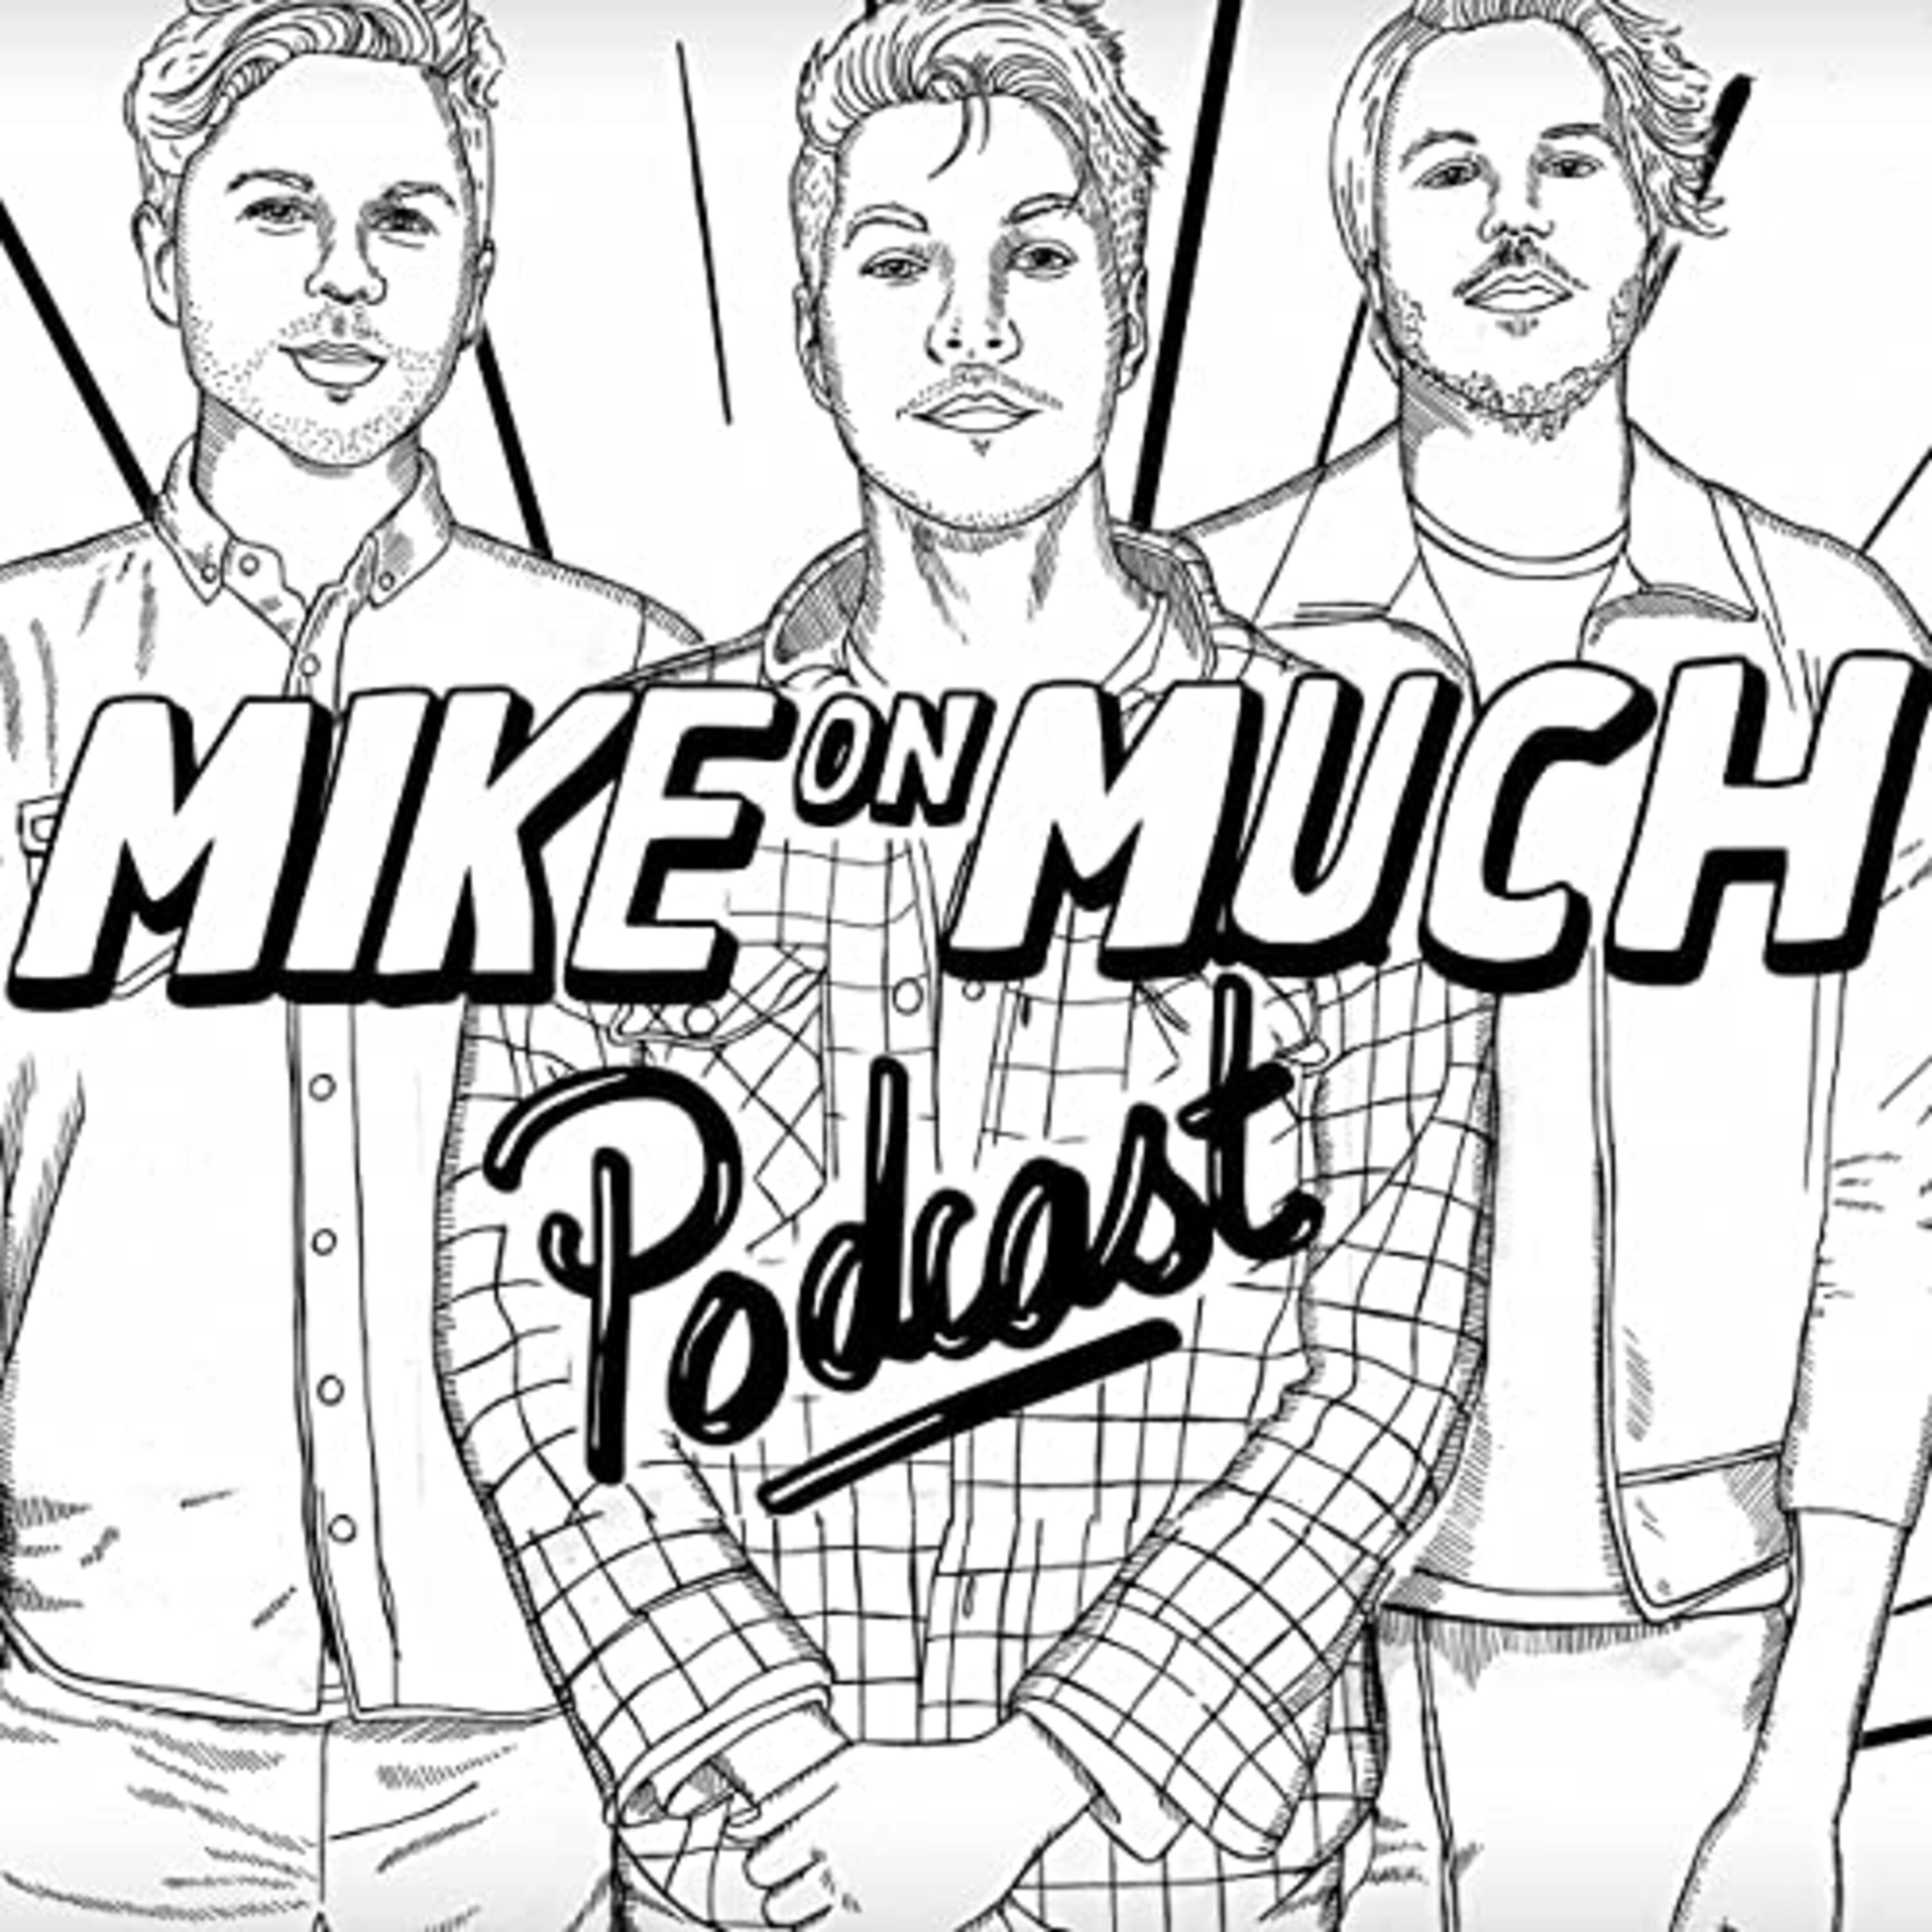 Season 1 Mike On Much: “Kick The Bucket”